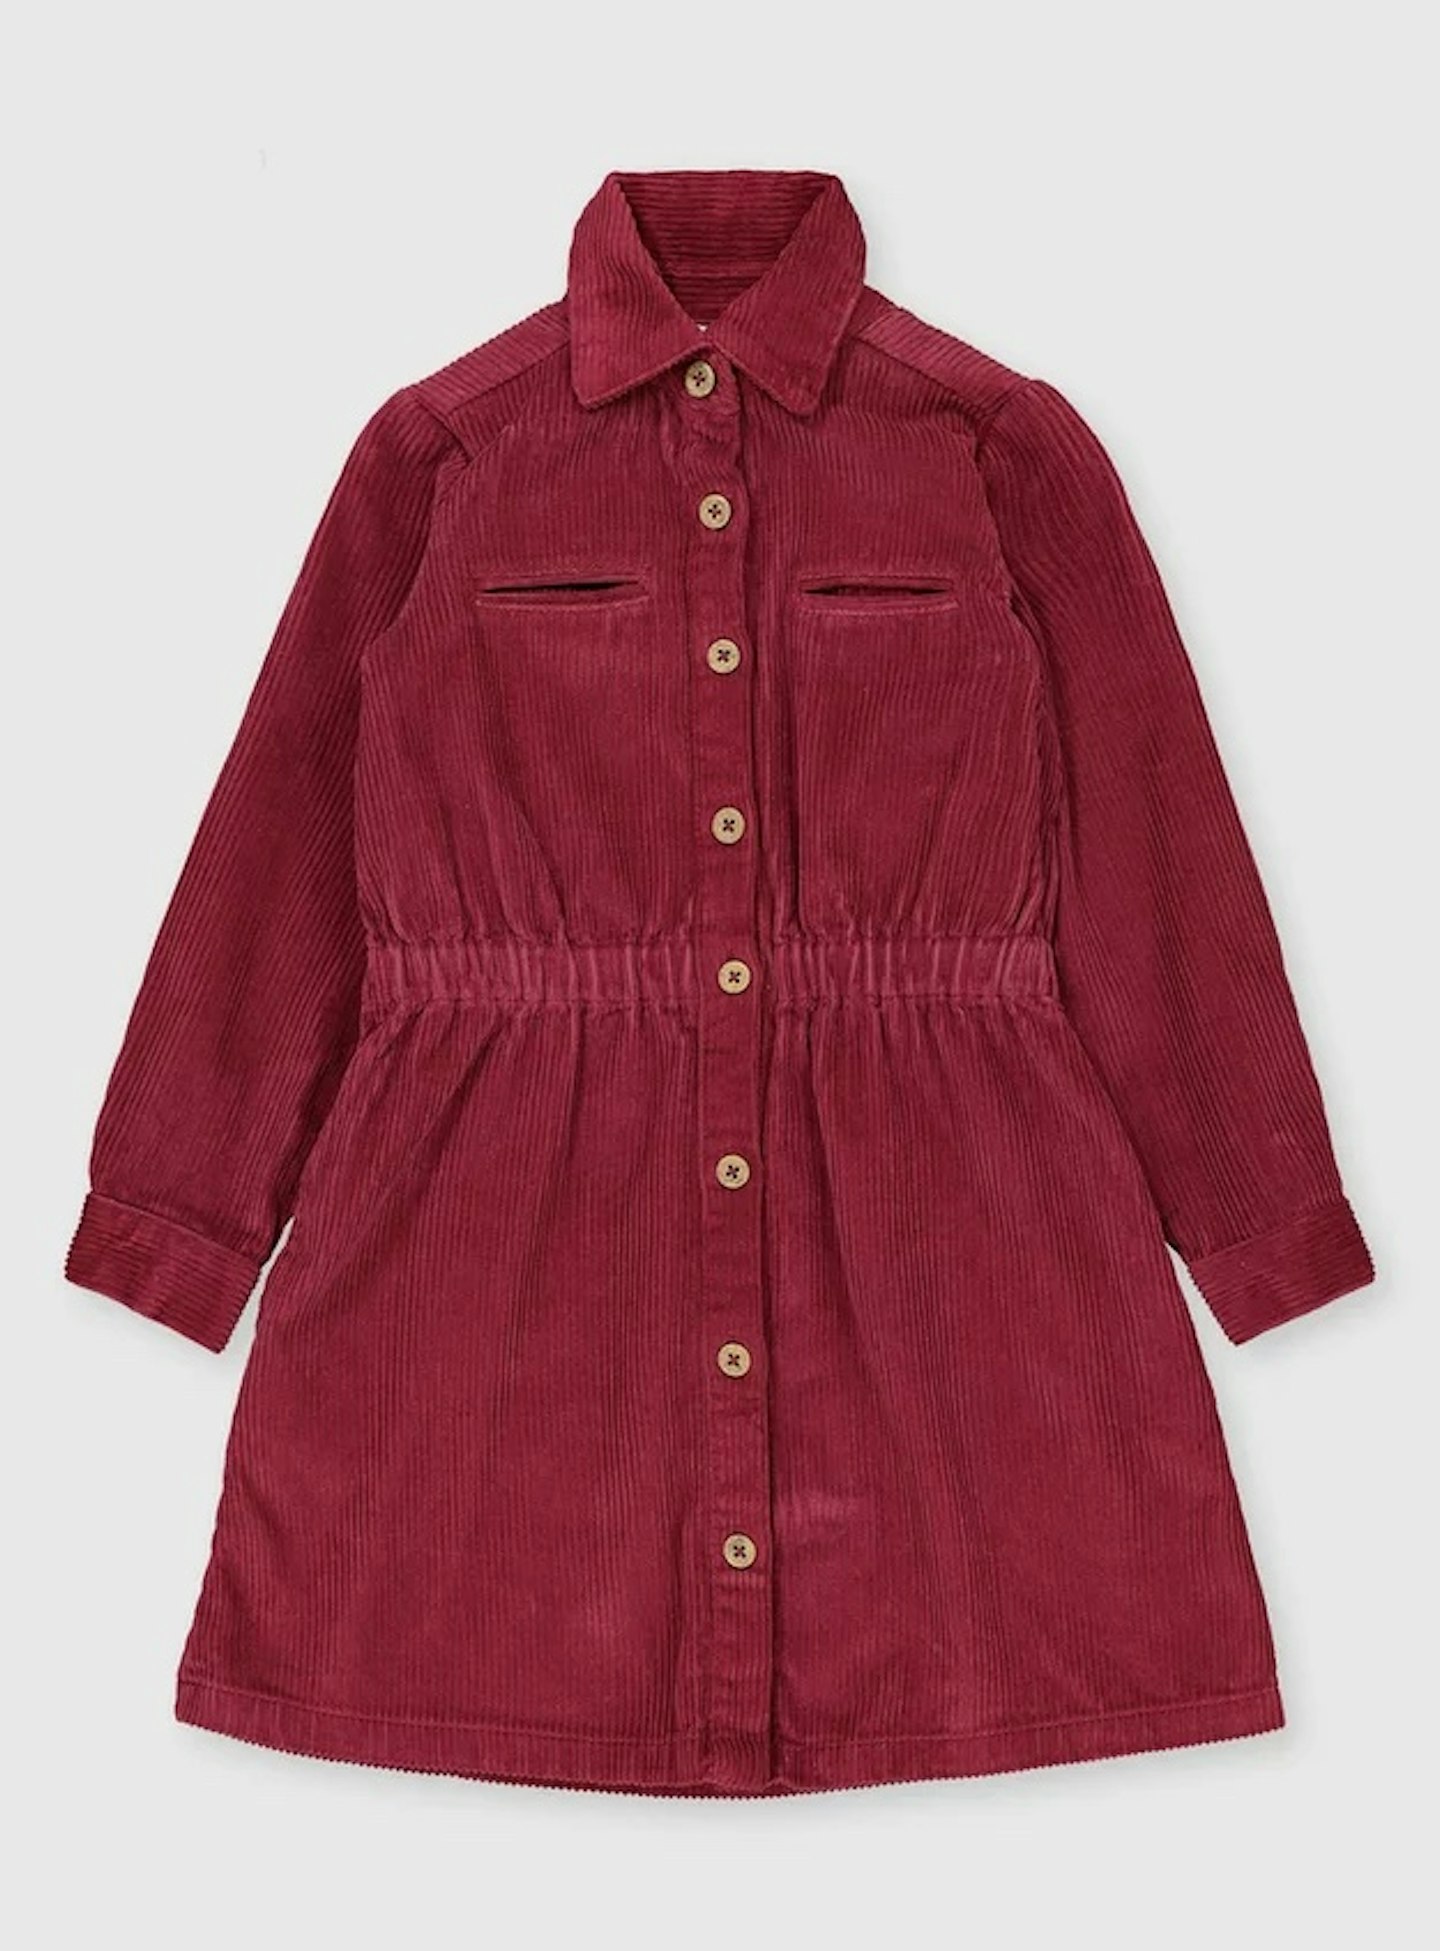 Berry Corduroy Shirt Dress (3-14 Years), From £11.00